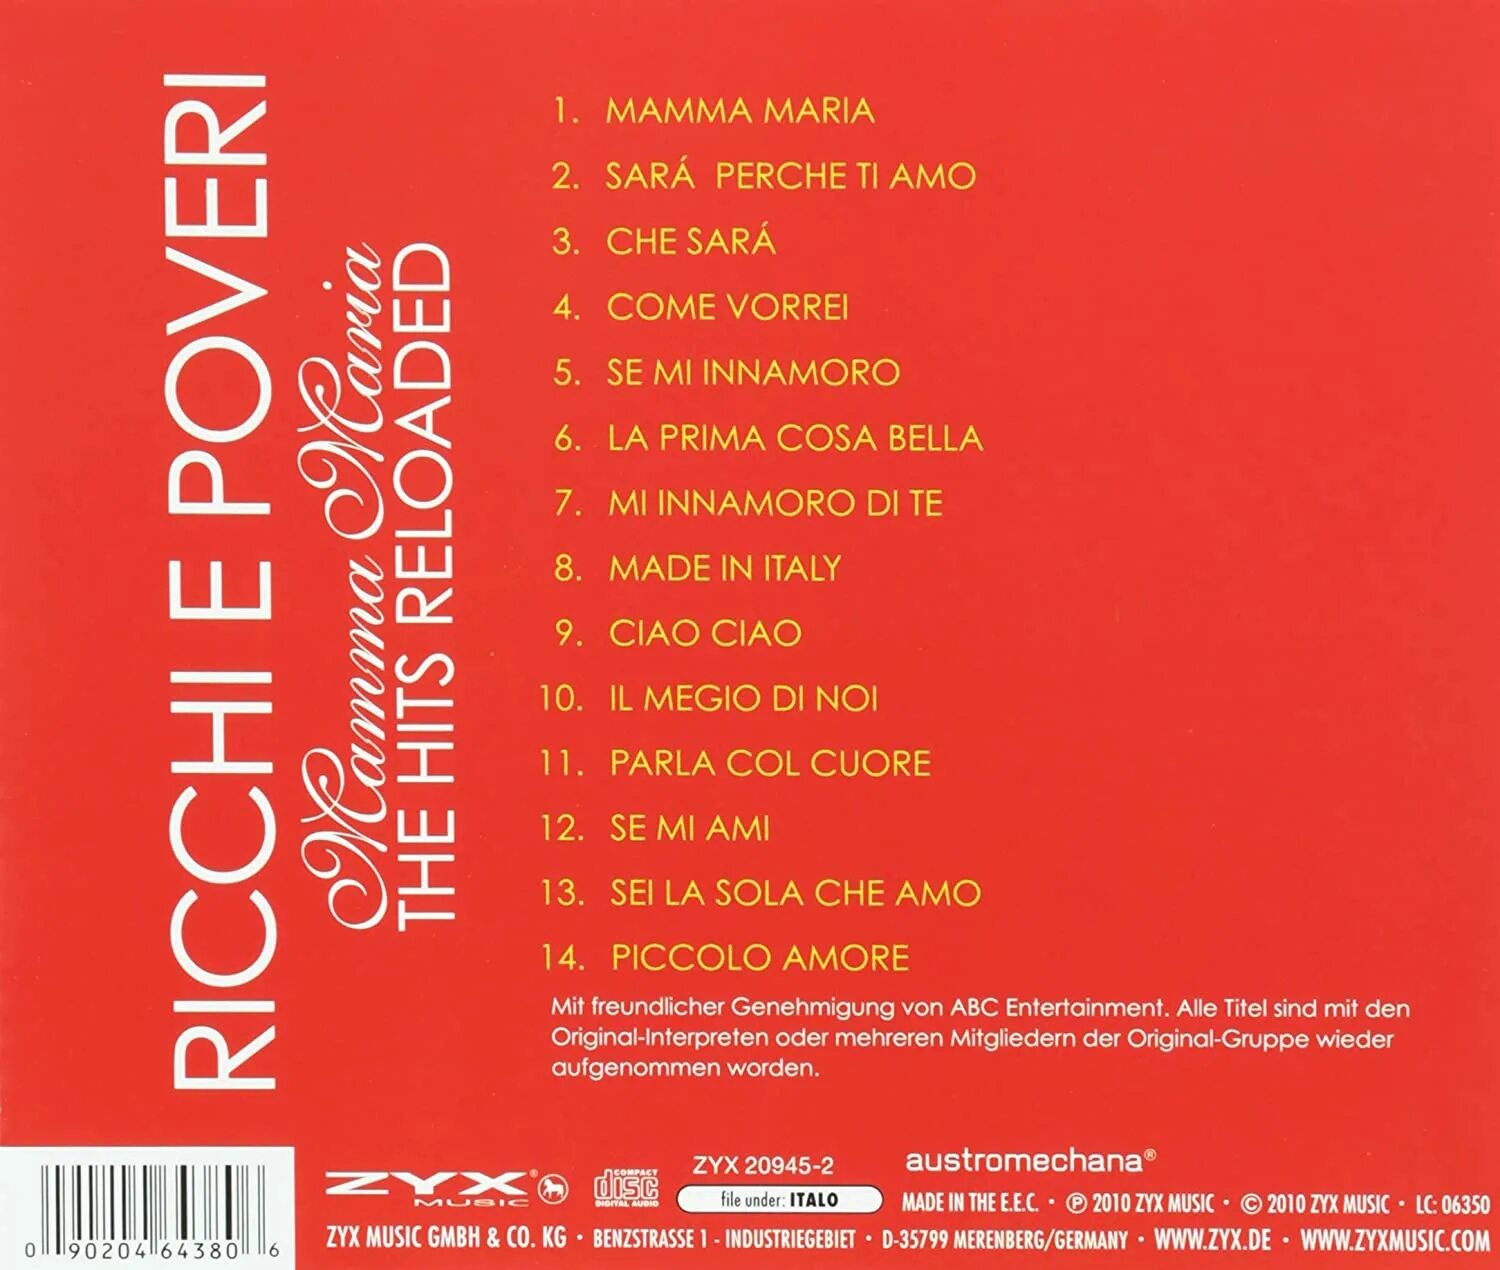 Mamma Maria: the Hits Reloaded Ricchi e Poveri. Ricchi e Poveri - (1994) - the collection. Ricchi e Poveri 2009 Greatest Hits.